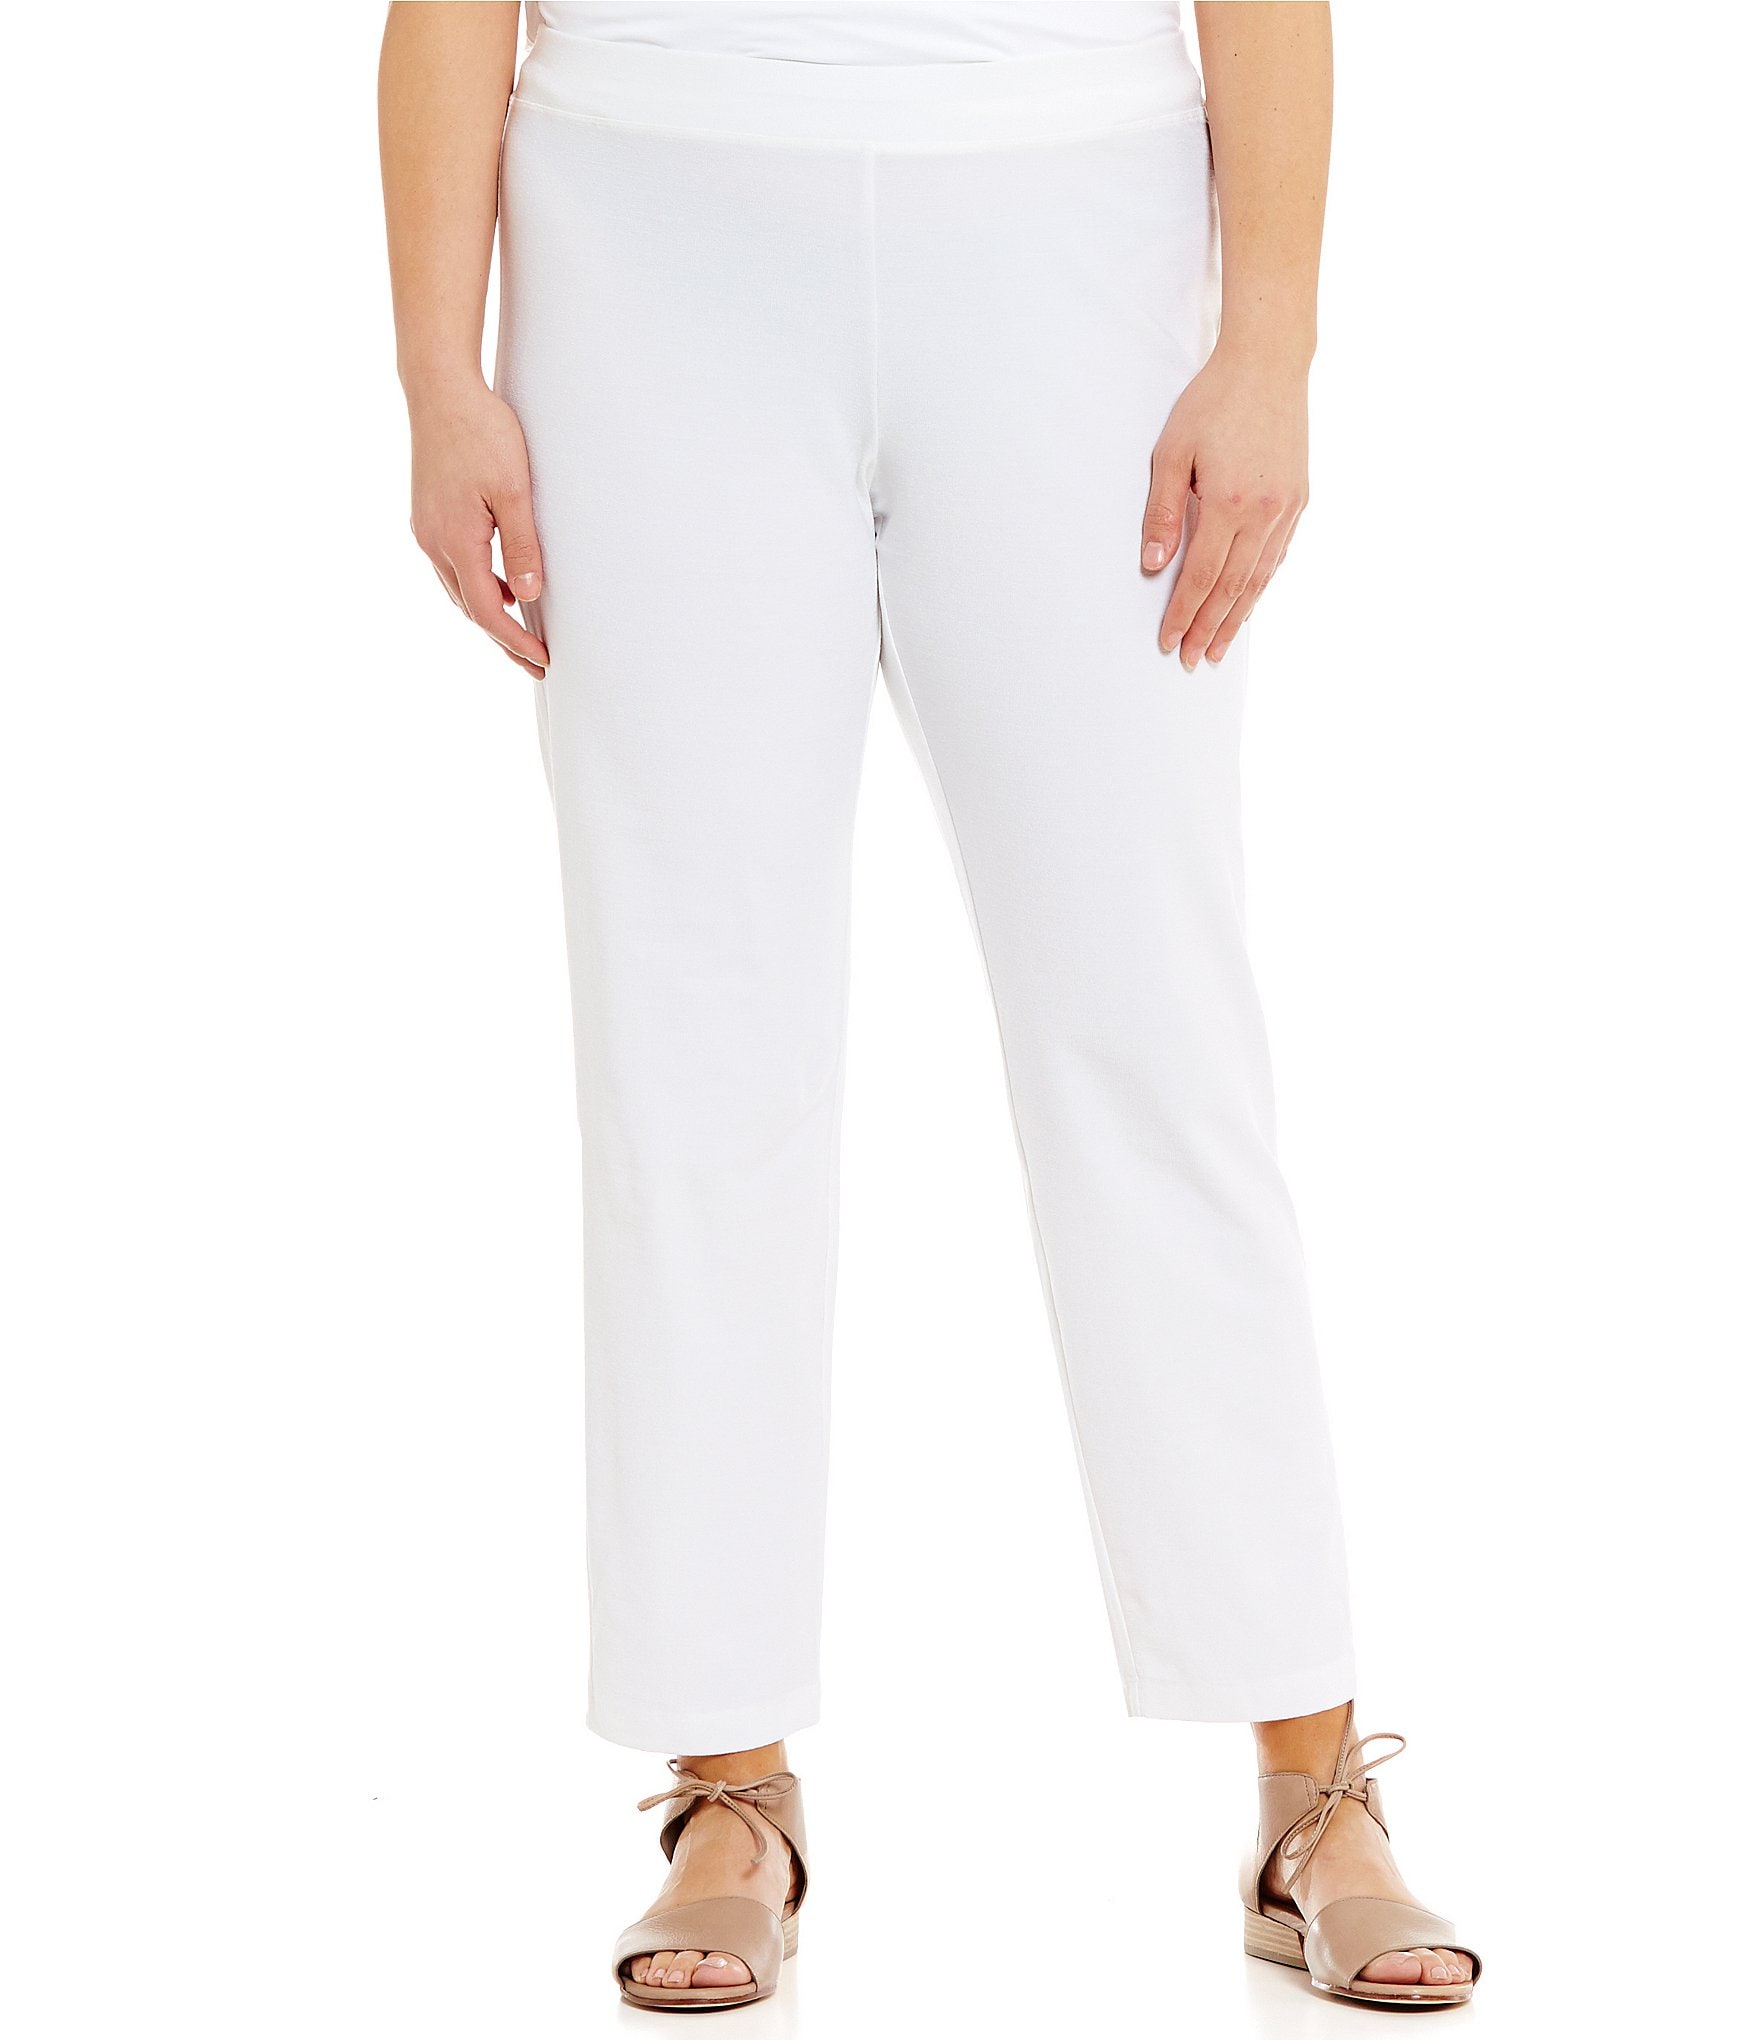 Nwot Parameter White Dress Pants Size 8 Cute